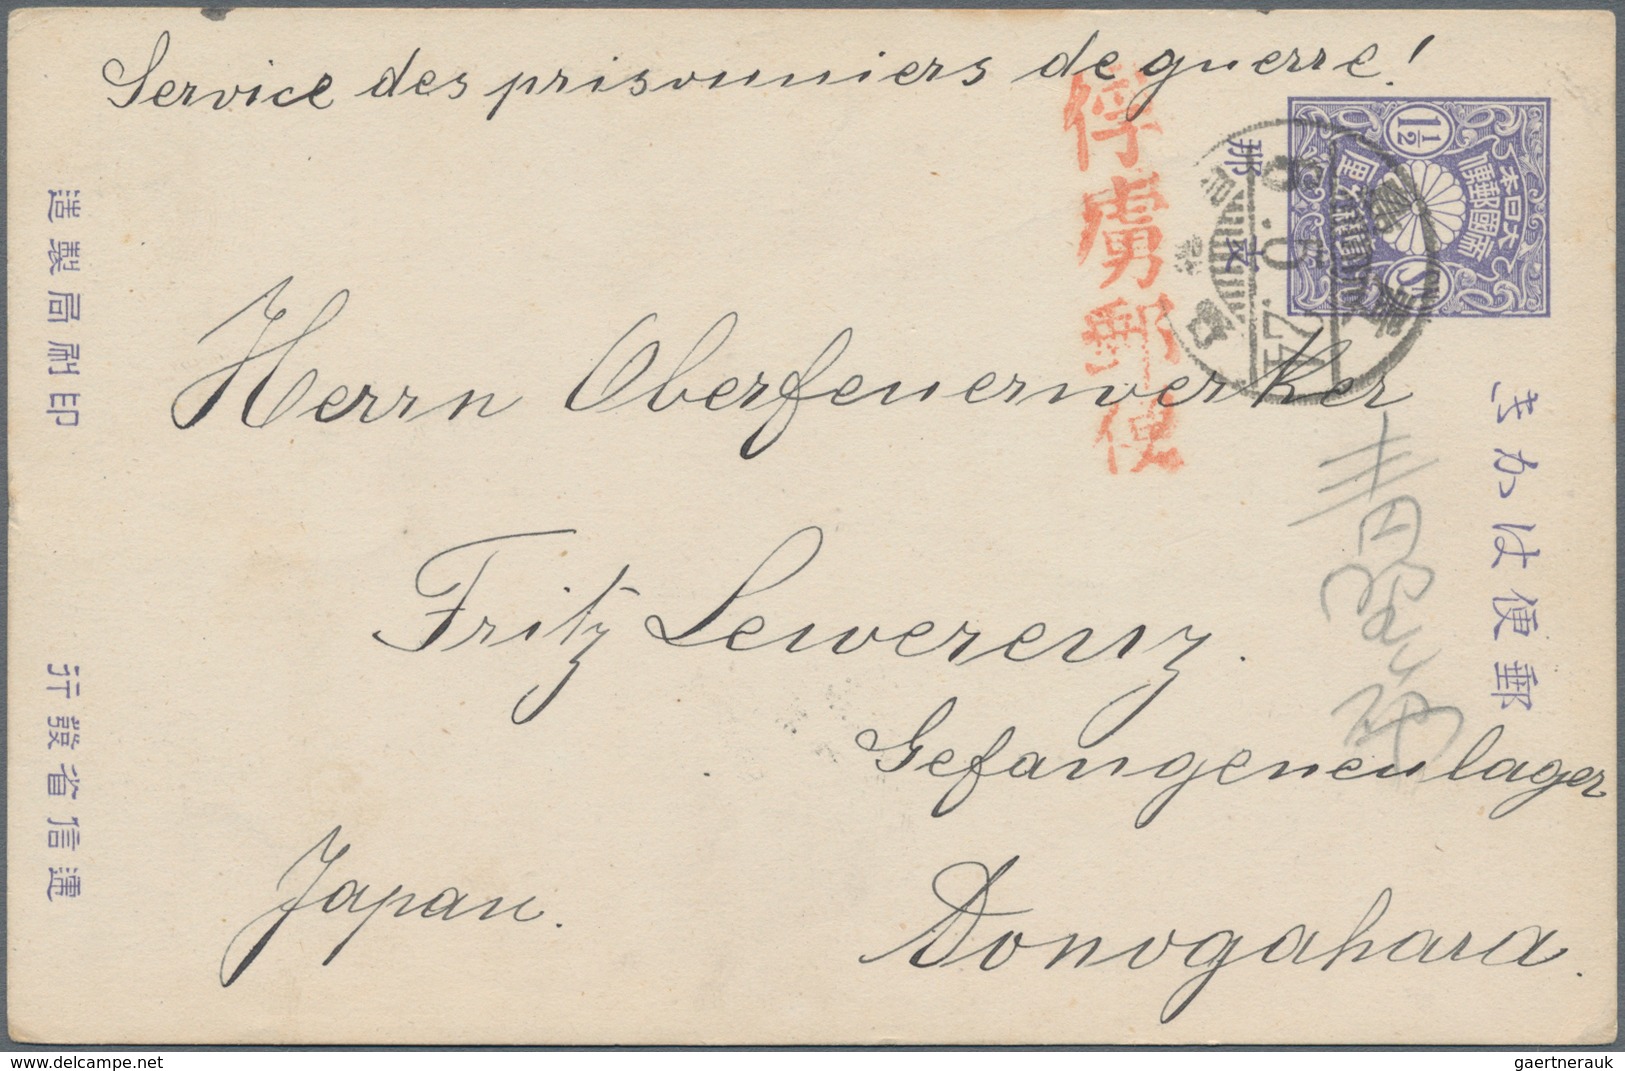 Japanische Post In China: 1912, Stationery Card 1 1/2 S. Canc. "Tsingtau FPO 6.5.24" (May 24, 1917) - 1943-45 Shanghai & Nanjing